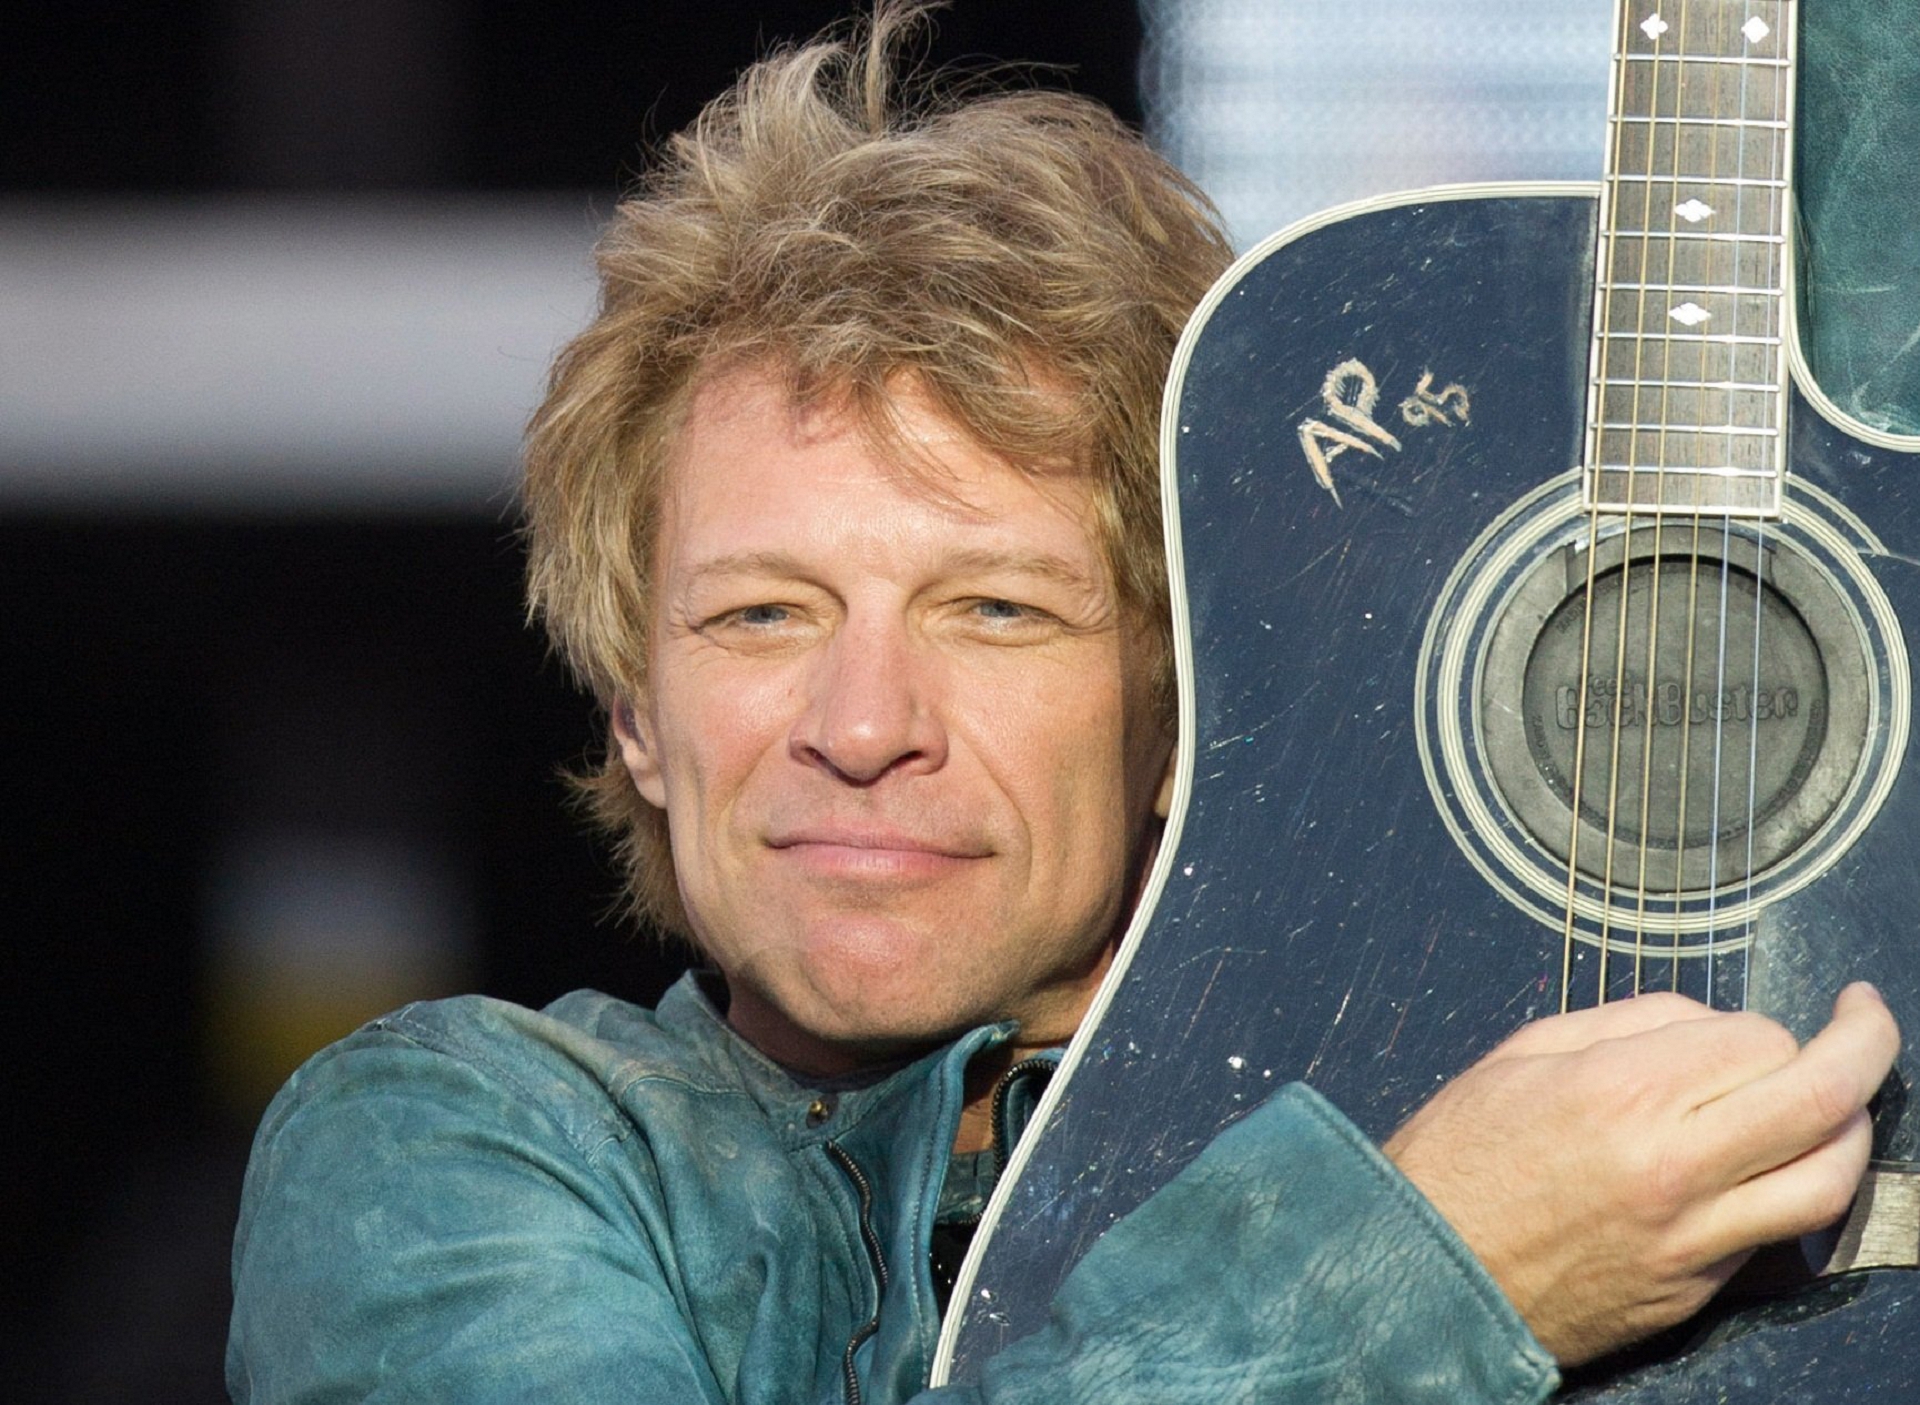 Jon Bon Jovi Wallpaper Image Photos Pictures Background